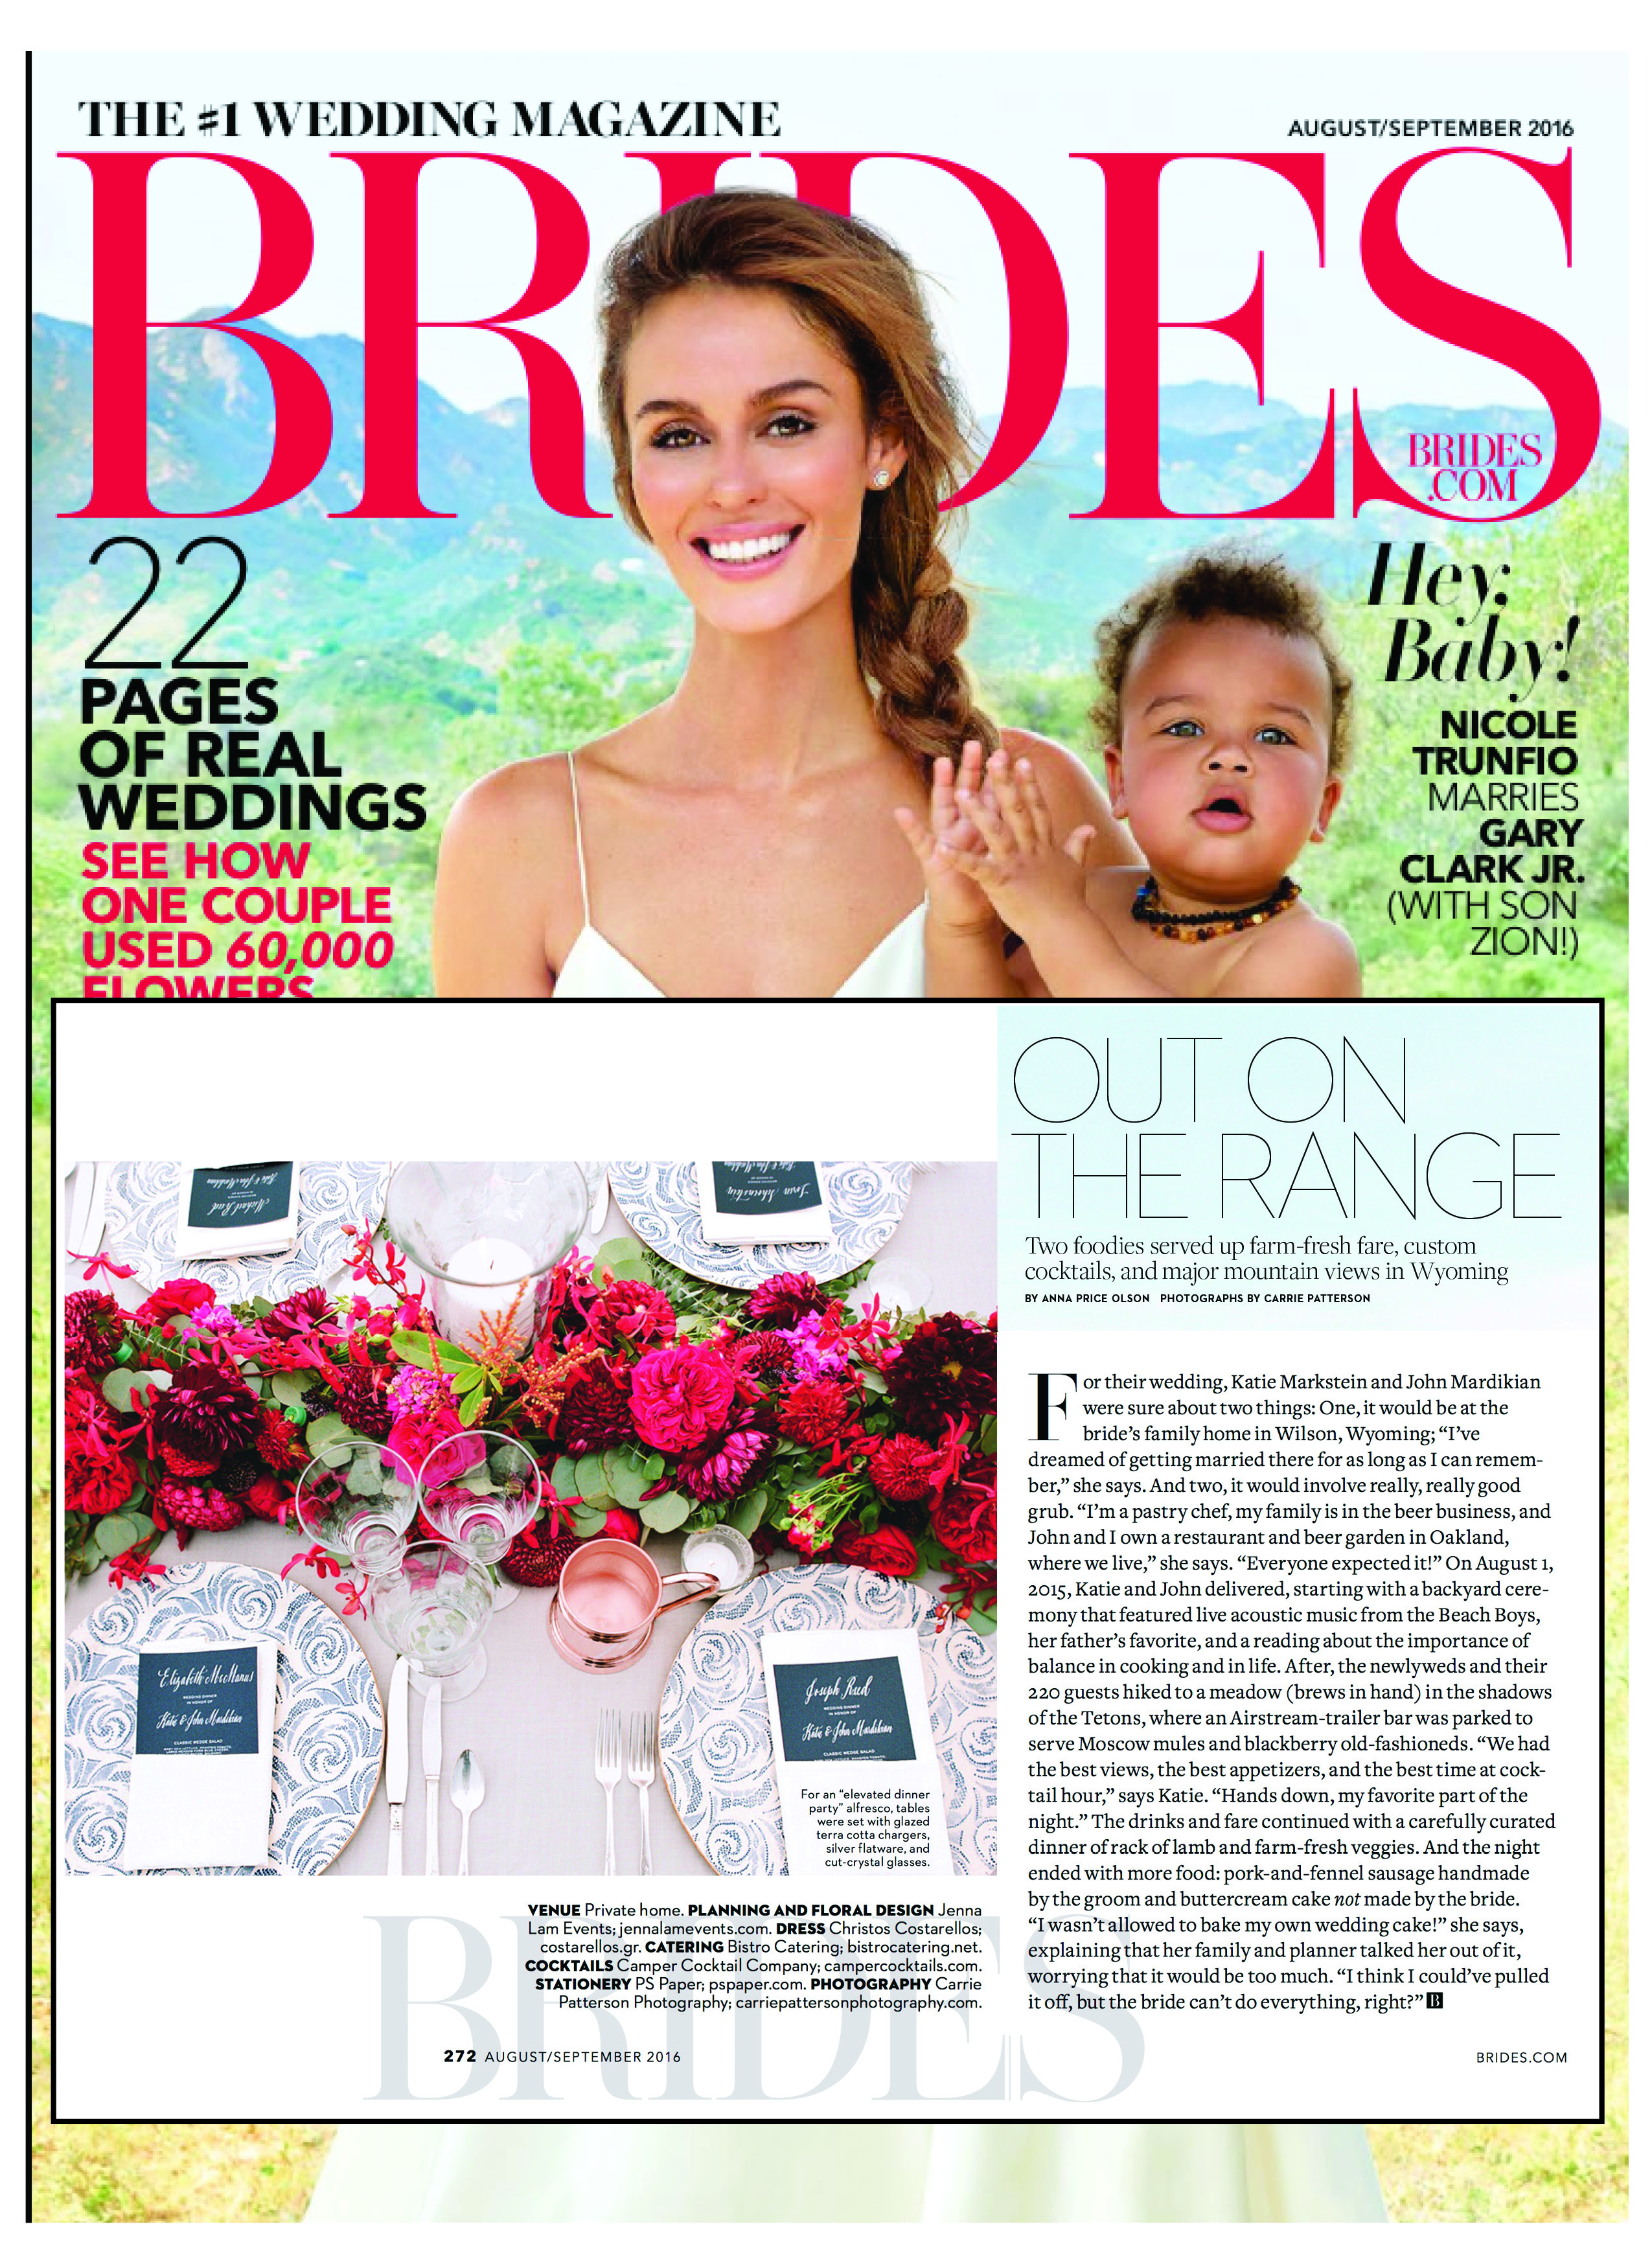 BRIDES Magazine August/September 2016